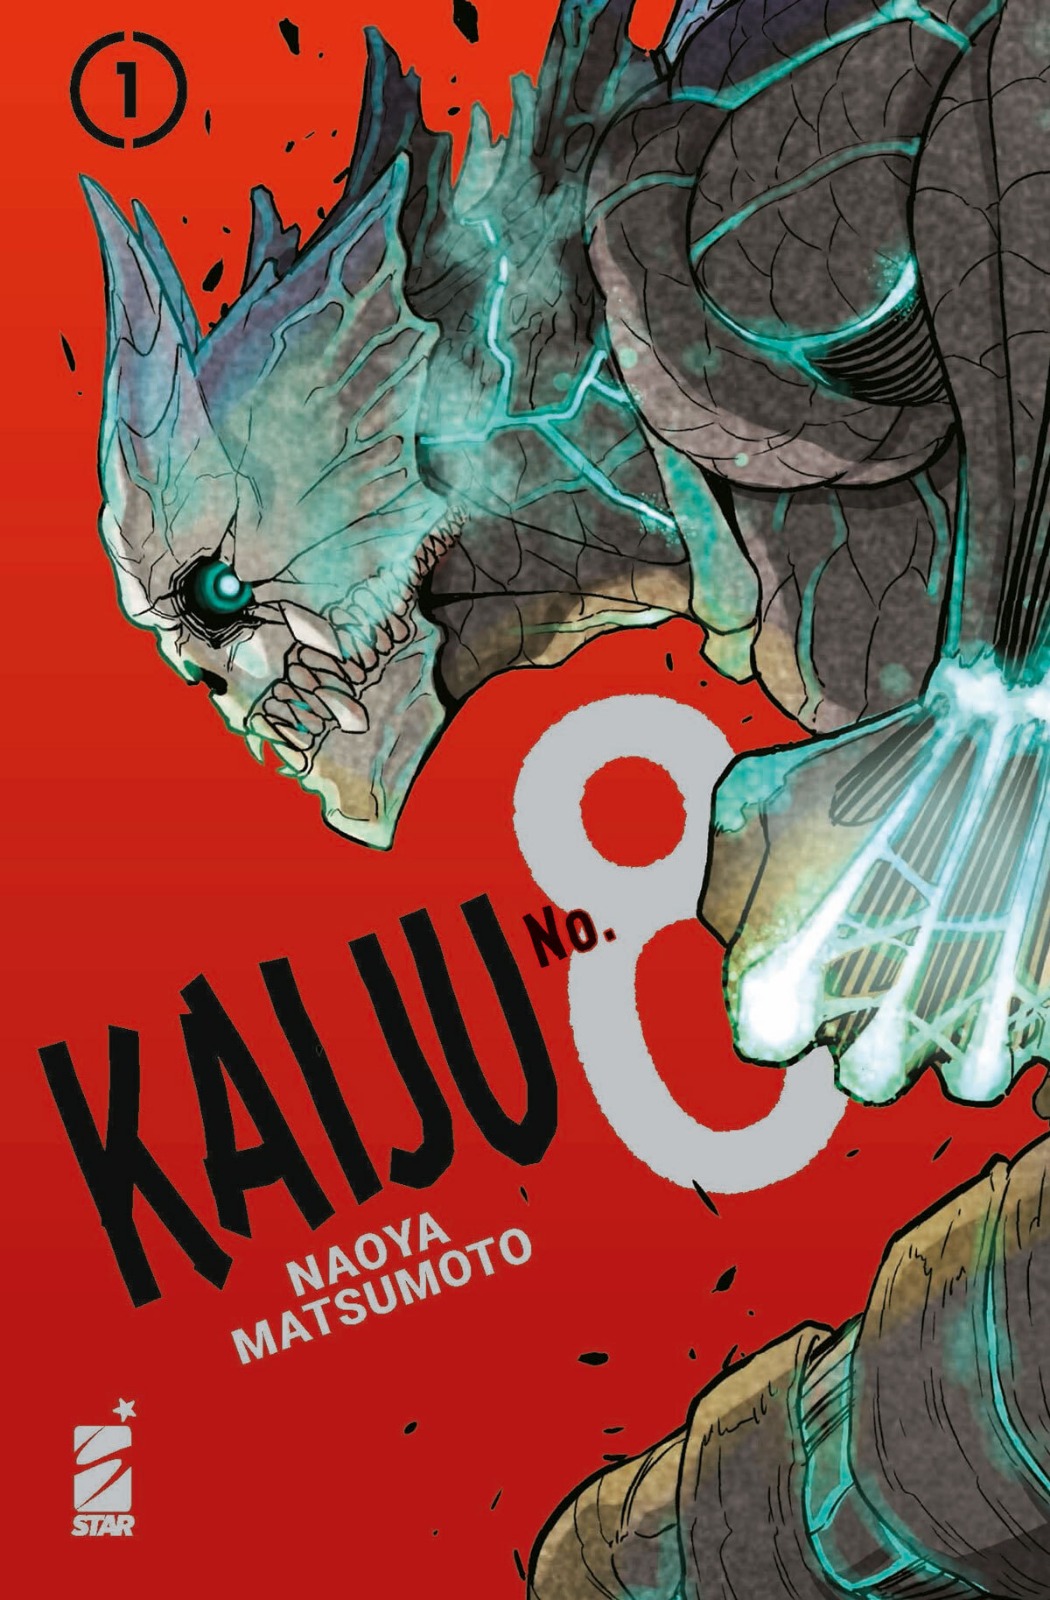 kafka nella sua forma kaiju nella copertina del manga kaiju no. 8 - nerdface